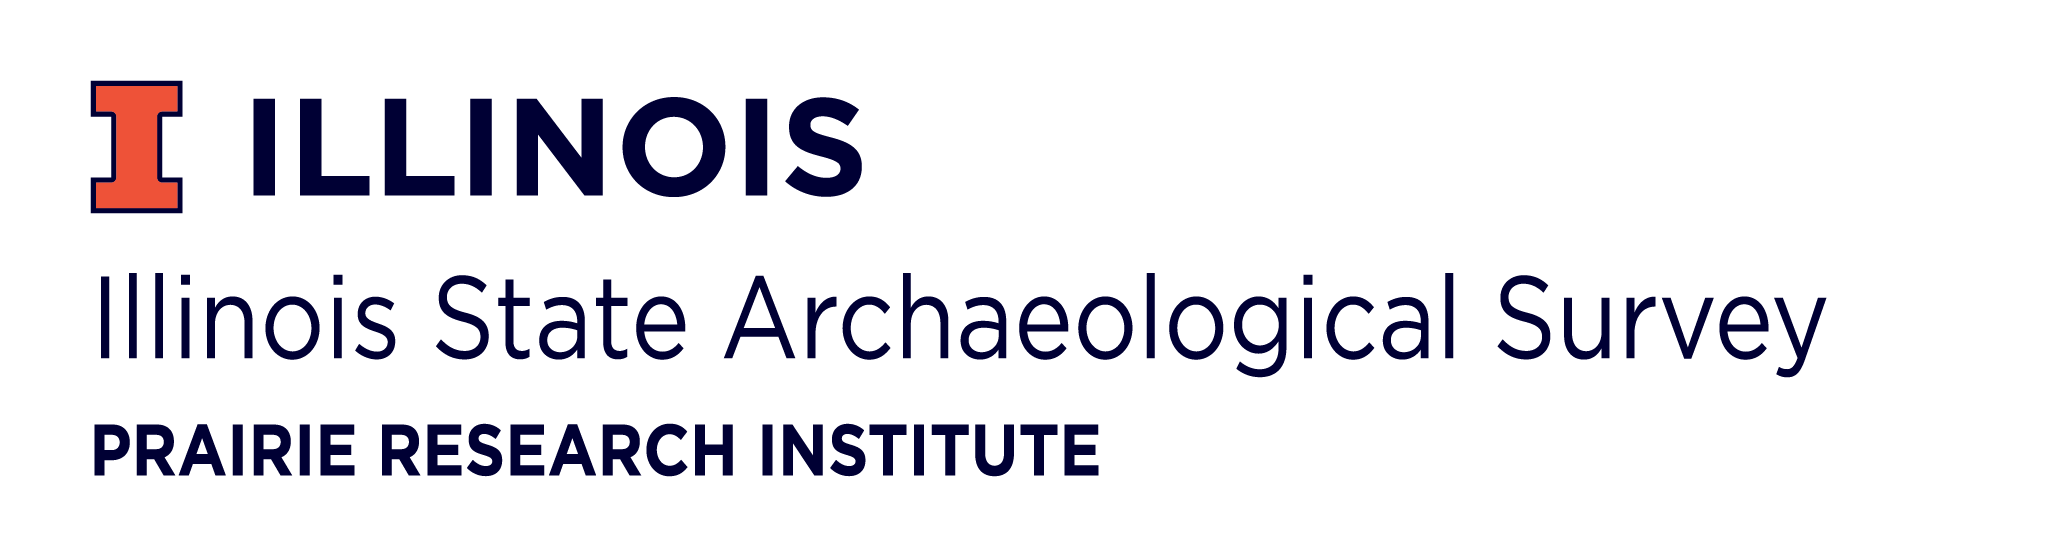 Illinois State Archaeological Survey